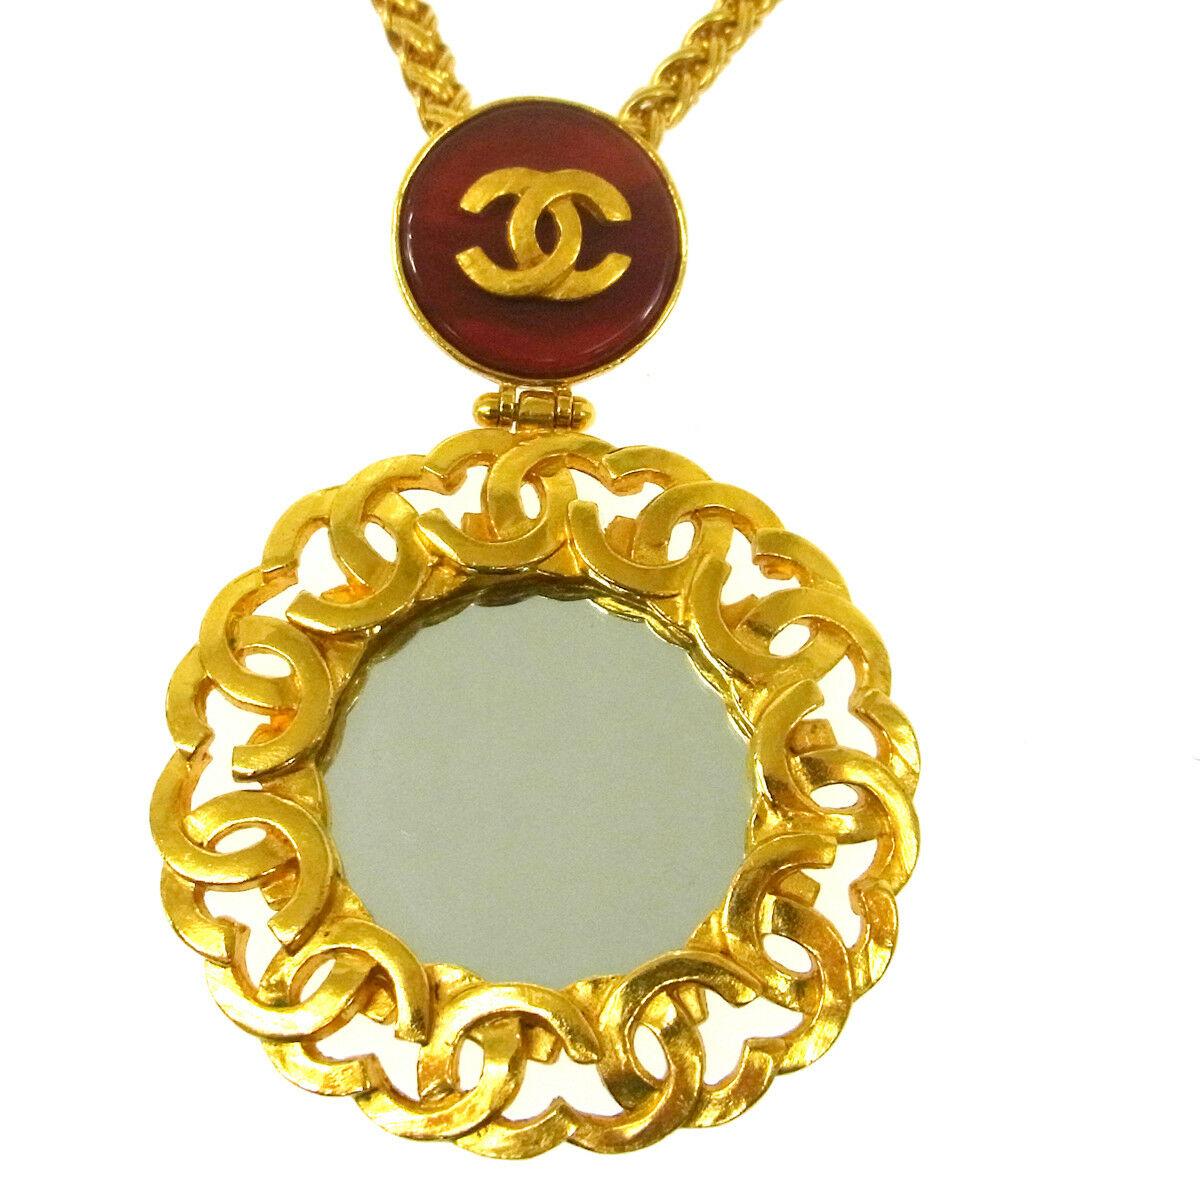 Metal
Gripoix
Gold tone
Mirror detail
Made in France
Charm diameter 2.25